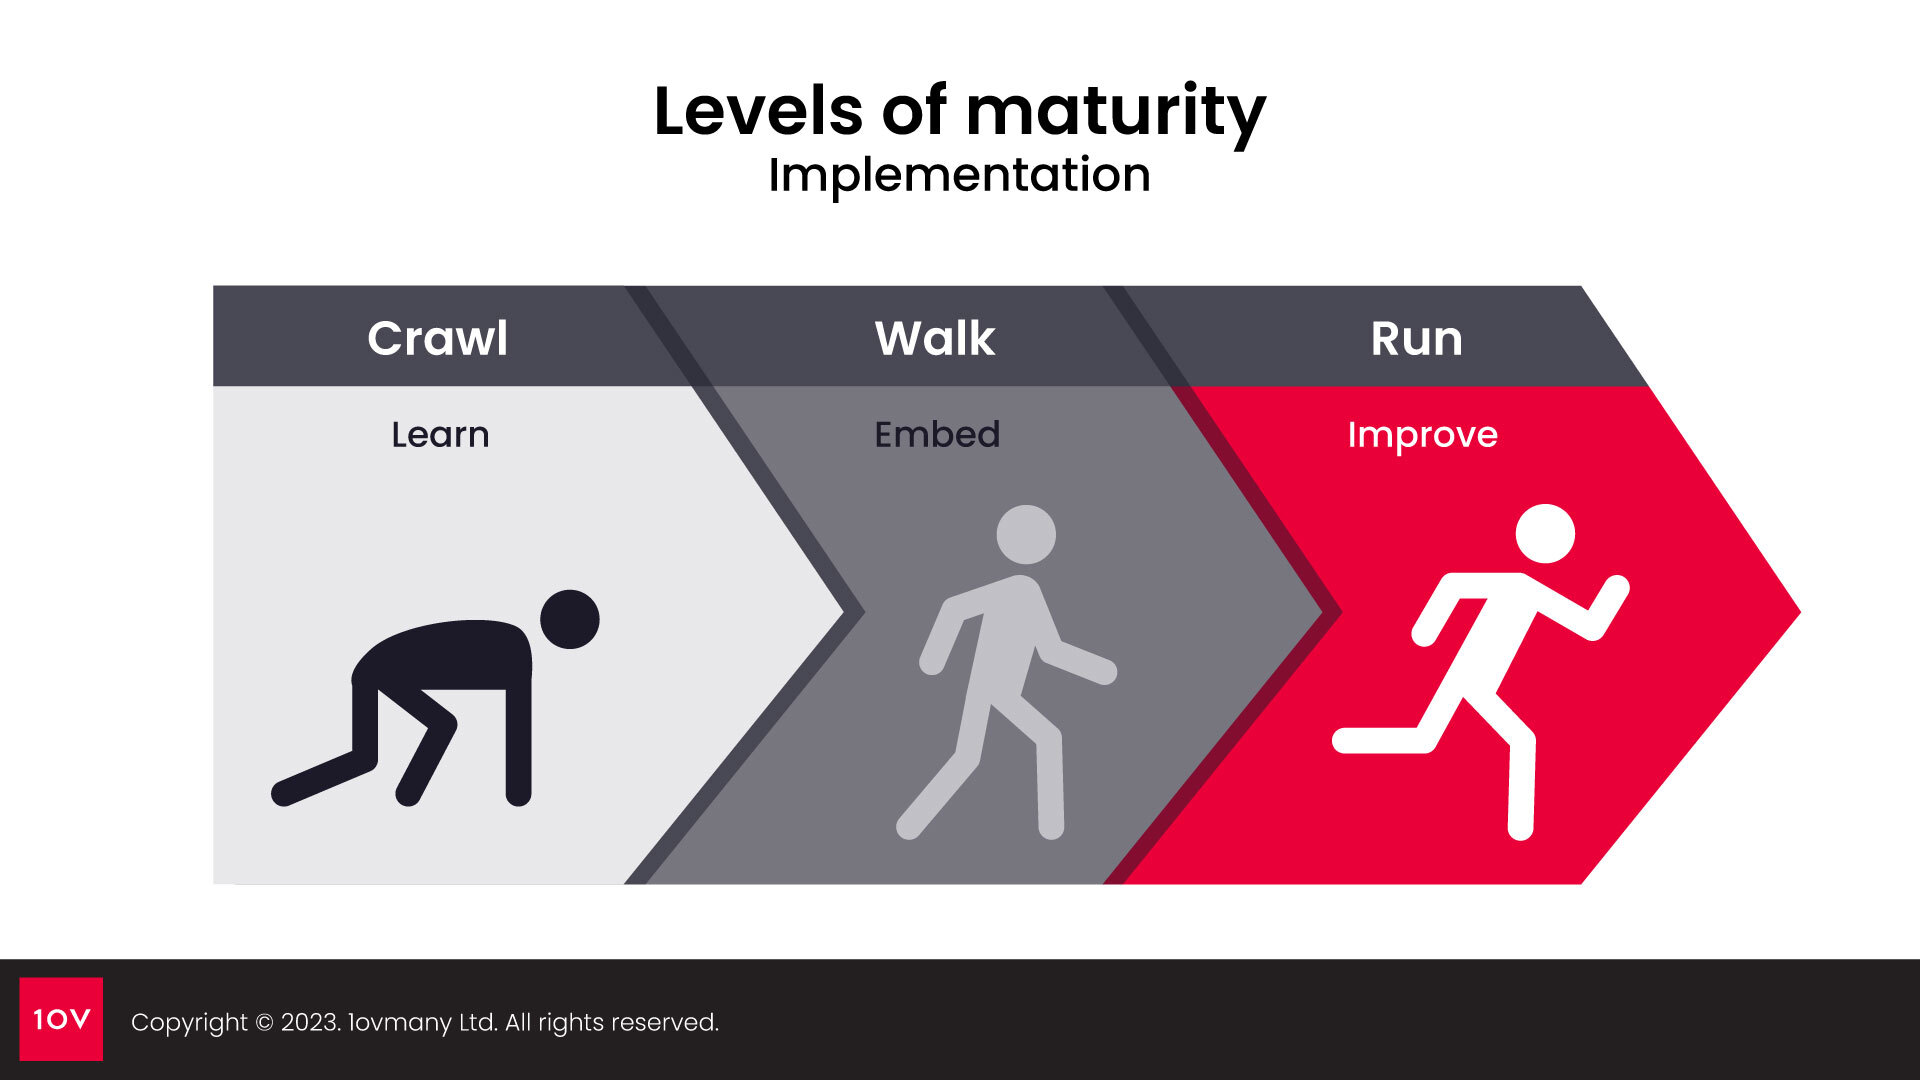 "Crawl, Walk, Run" Levels of Maturity Model